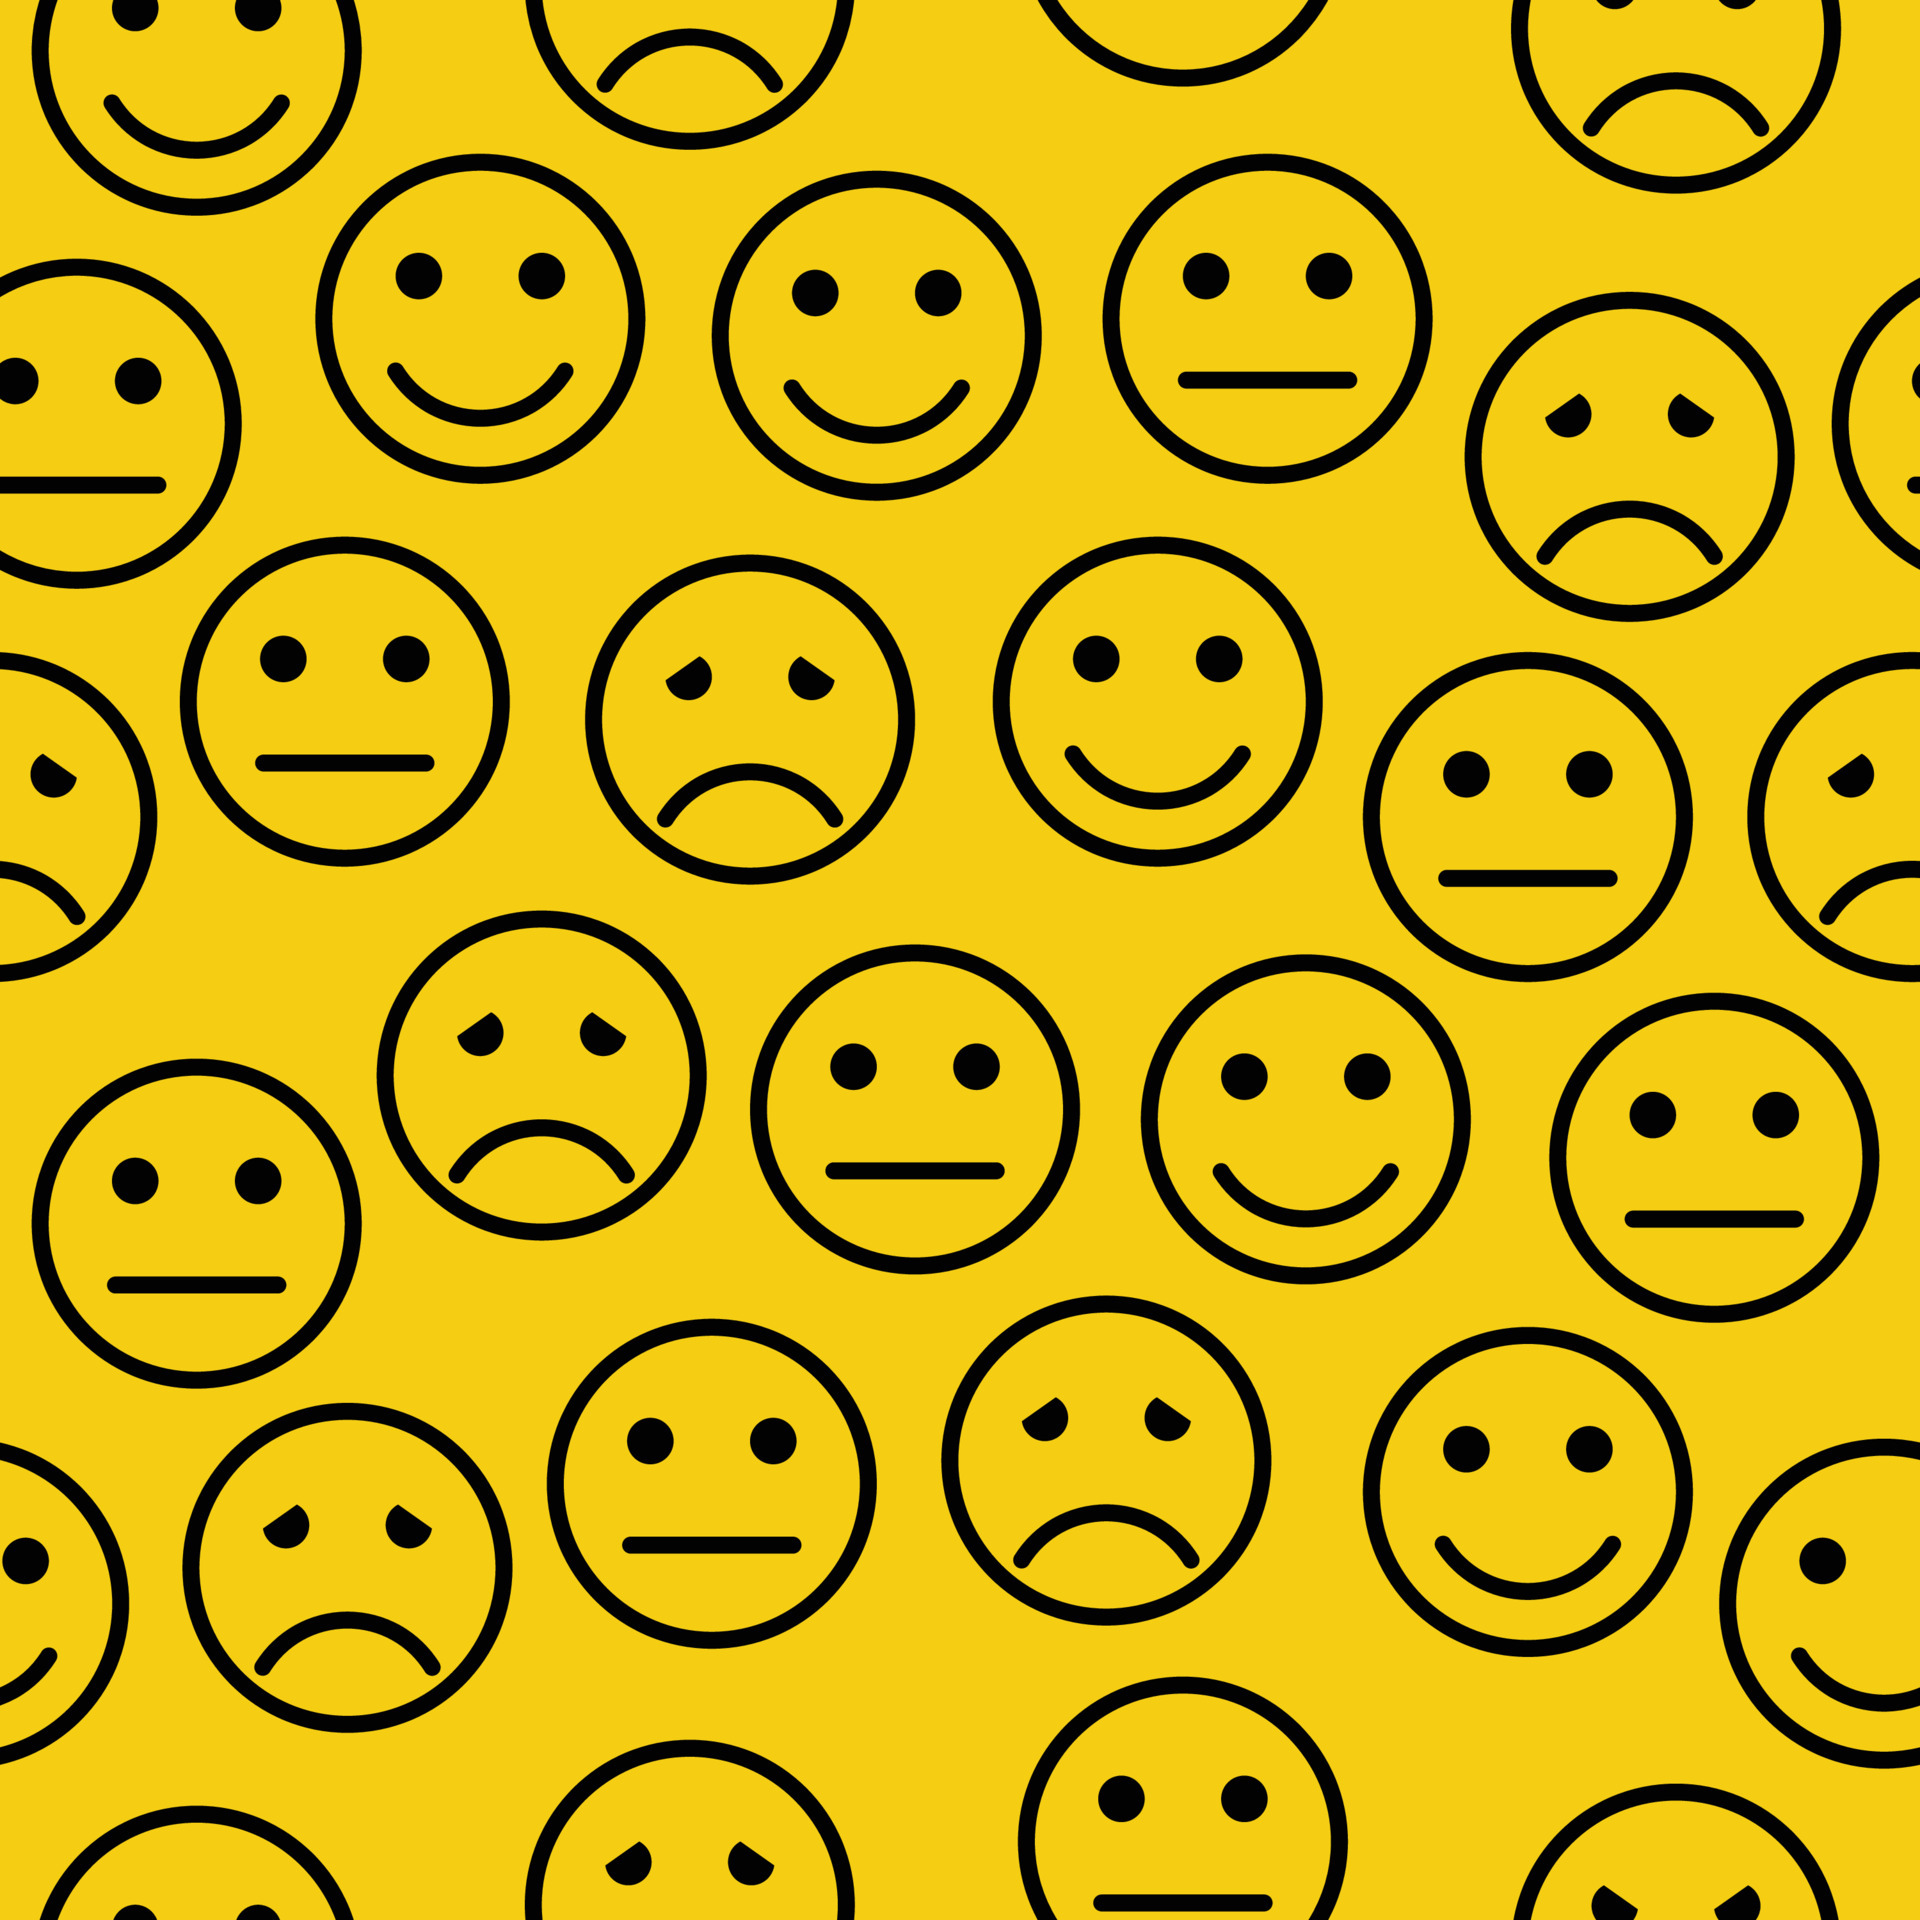 emoji-triste · Marketing Digital